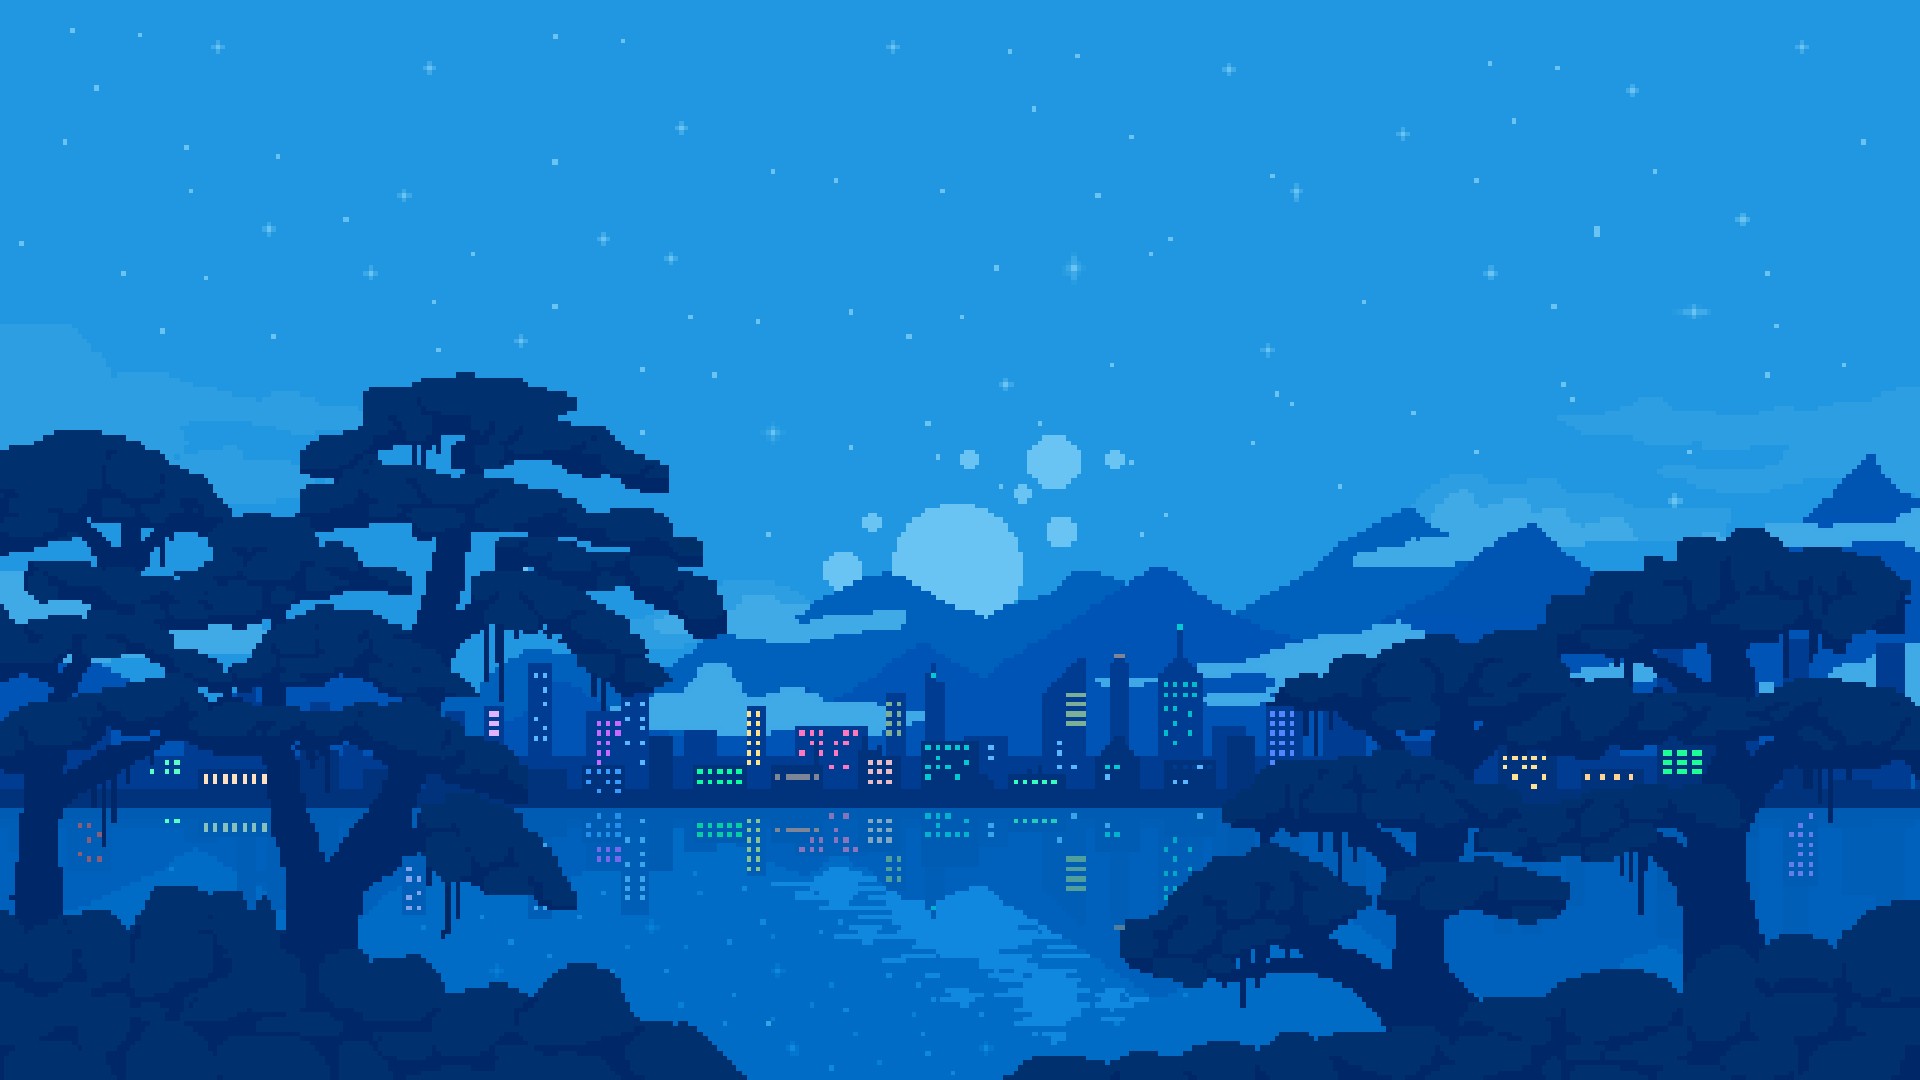 General 1920x1080 pixel art pixelated nature landscape pixels digital art trees cityscape night stars water blue background reflection blue